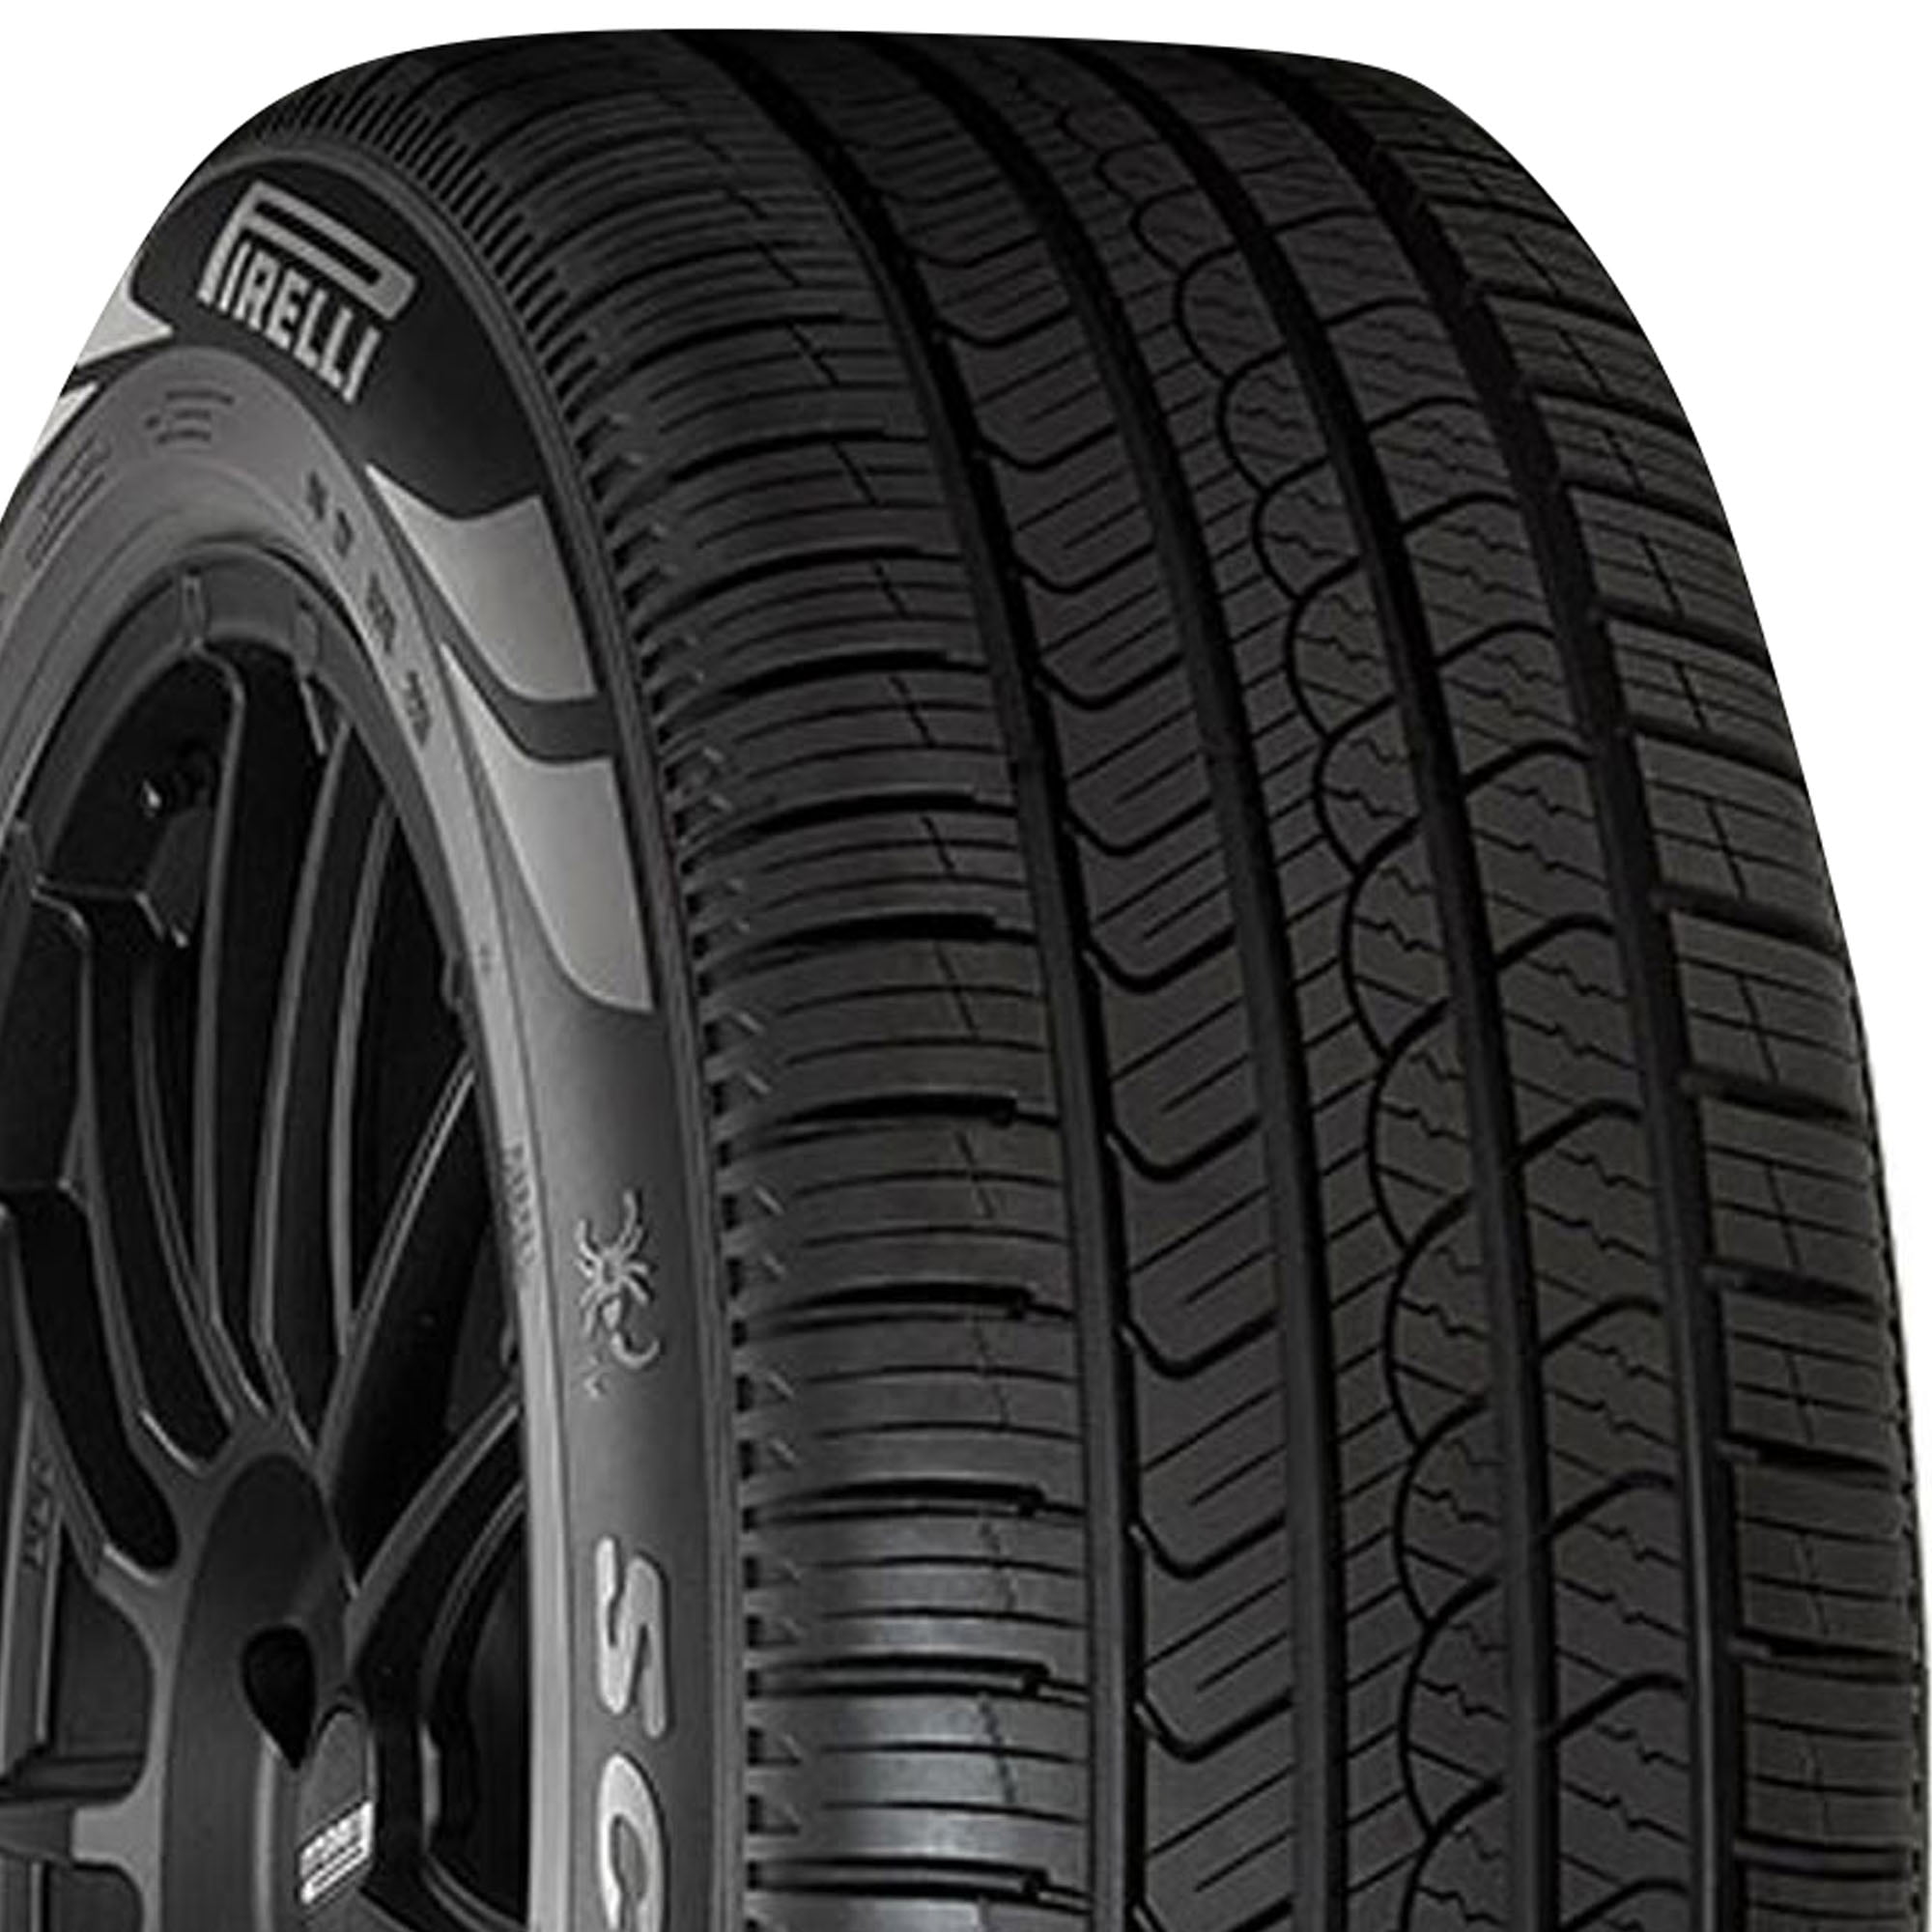 Pirelli Scorpion All SUV/Crossover 104H Plus 3 Season 235/65R17 All Season Tire